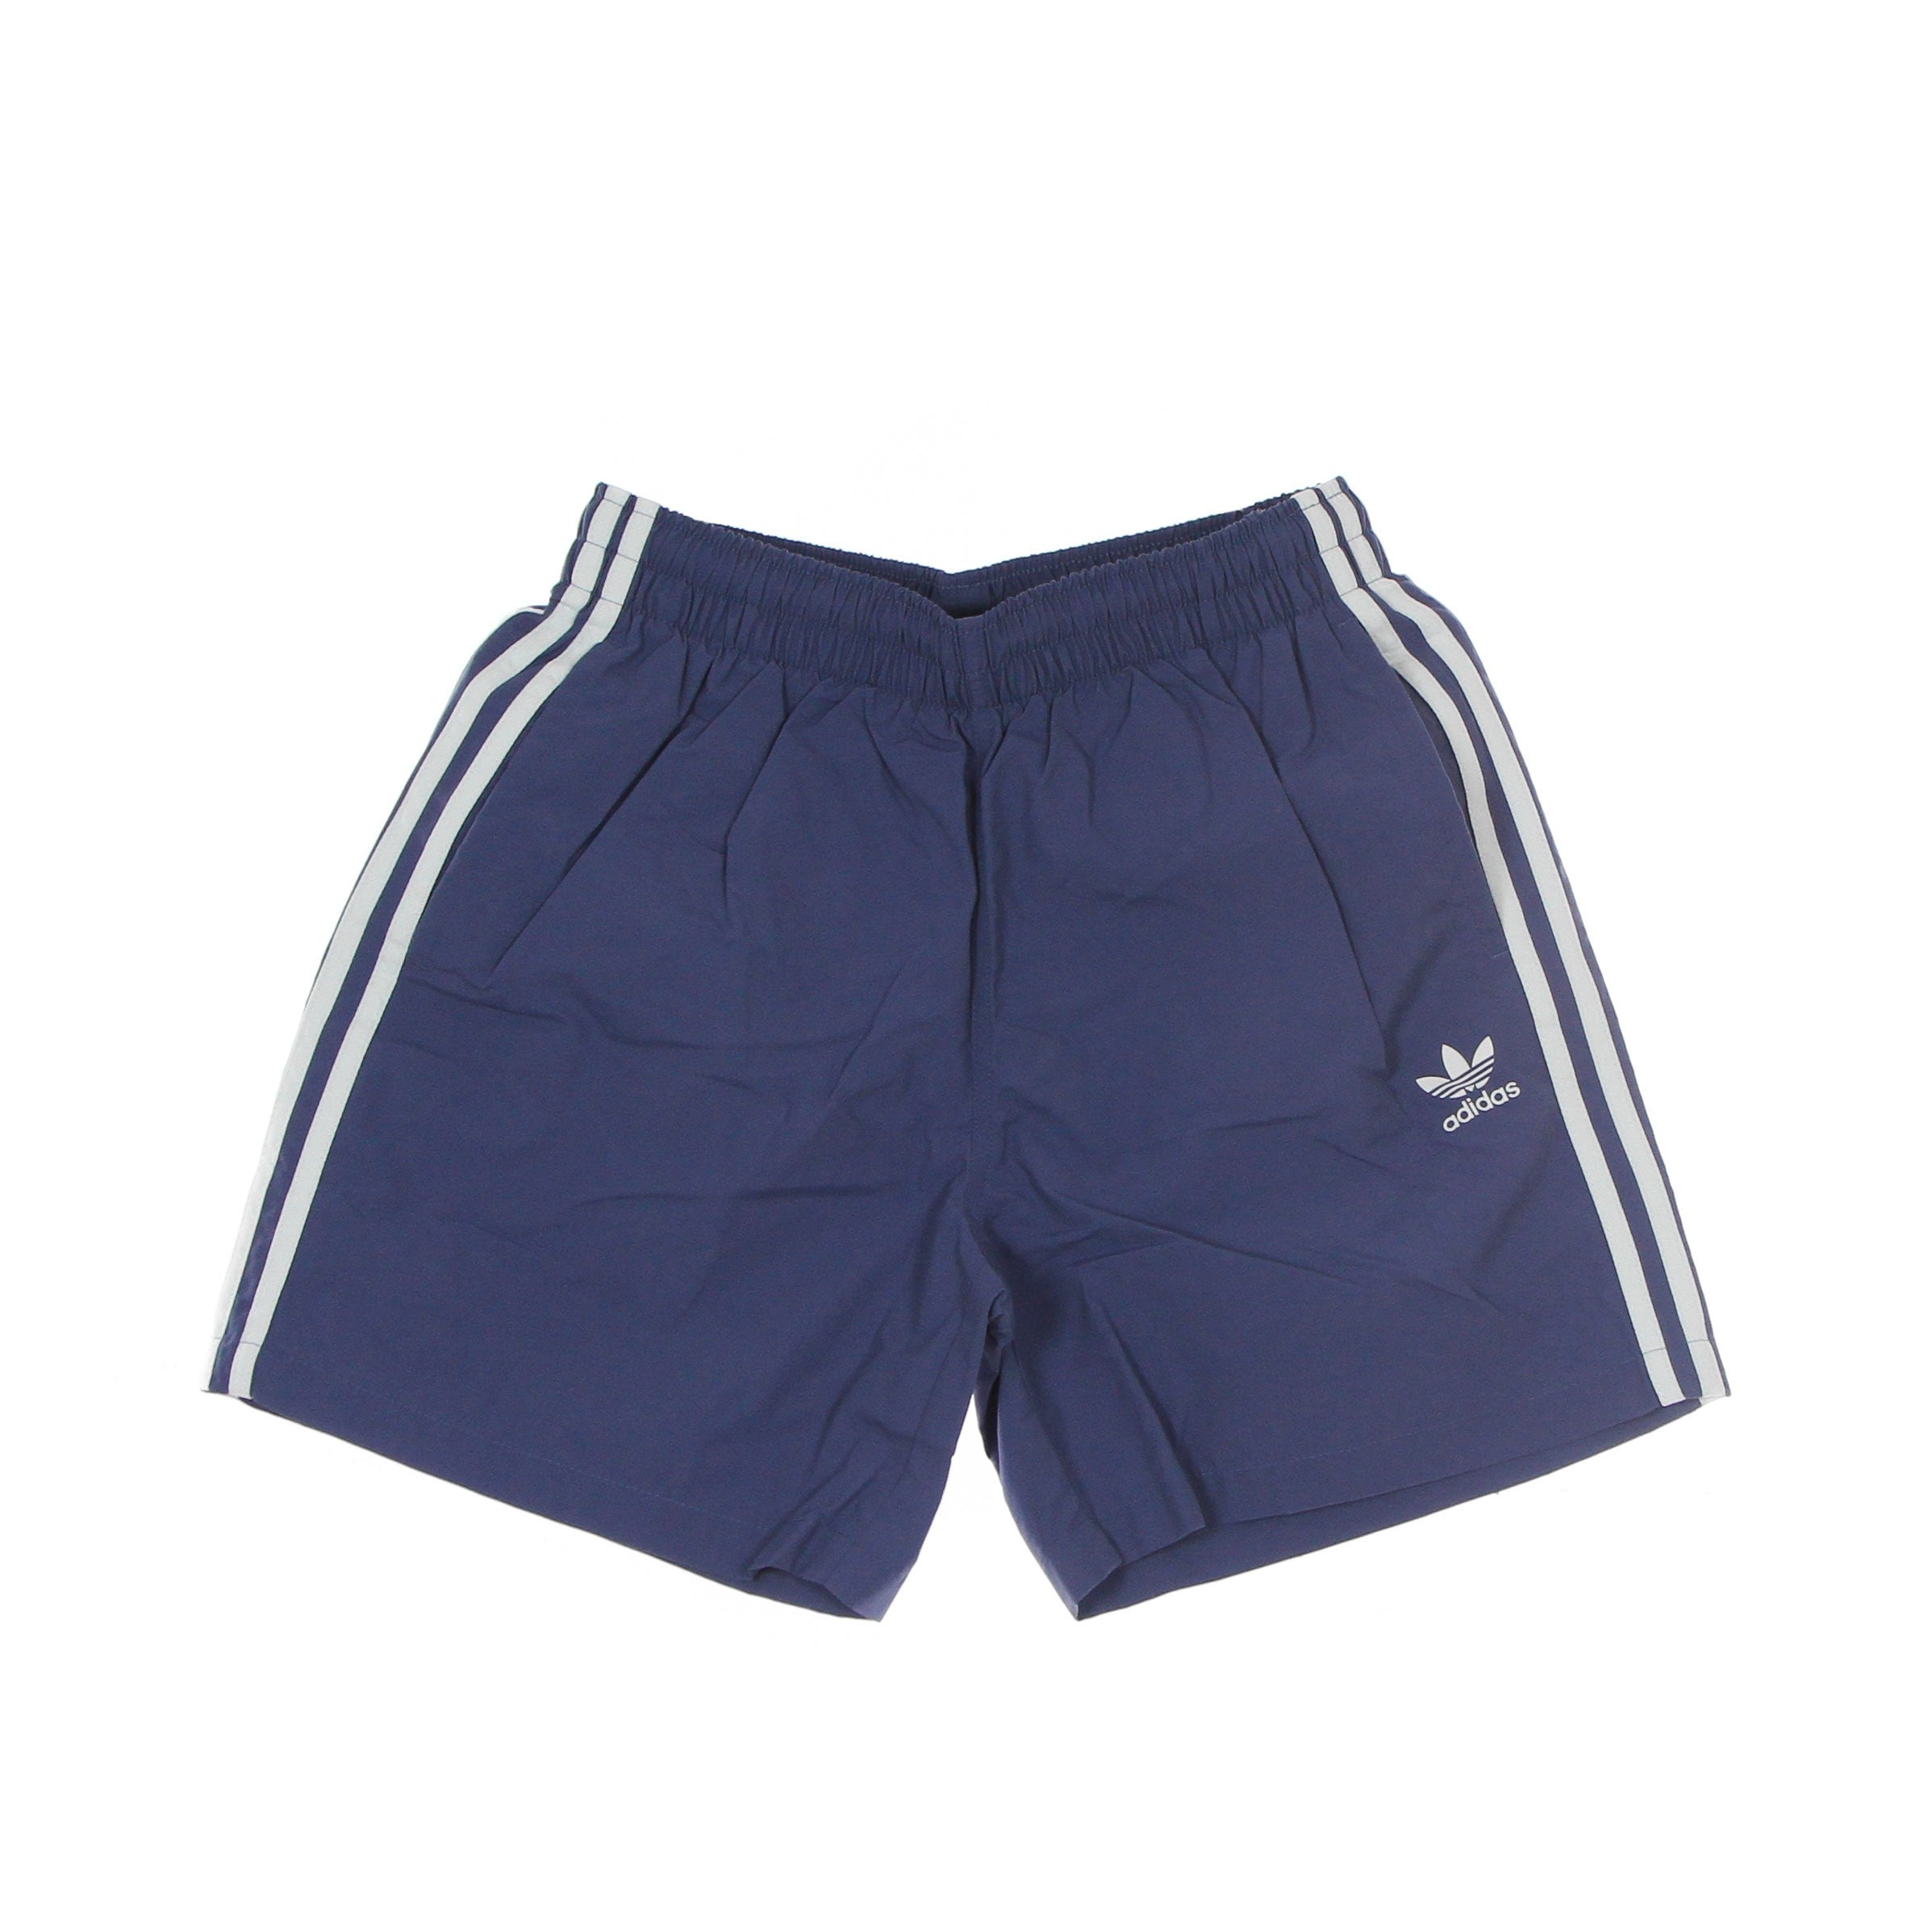 Adidas, Costume Pantaloncino Uomo 3 Stripes Swimshort, Crew Blue